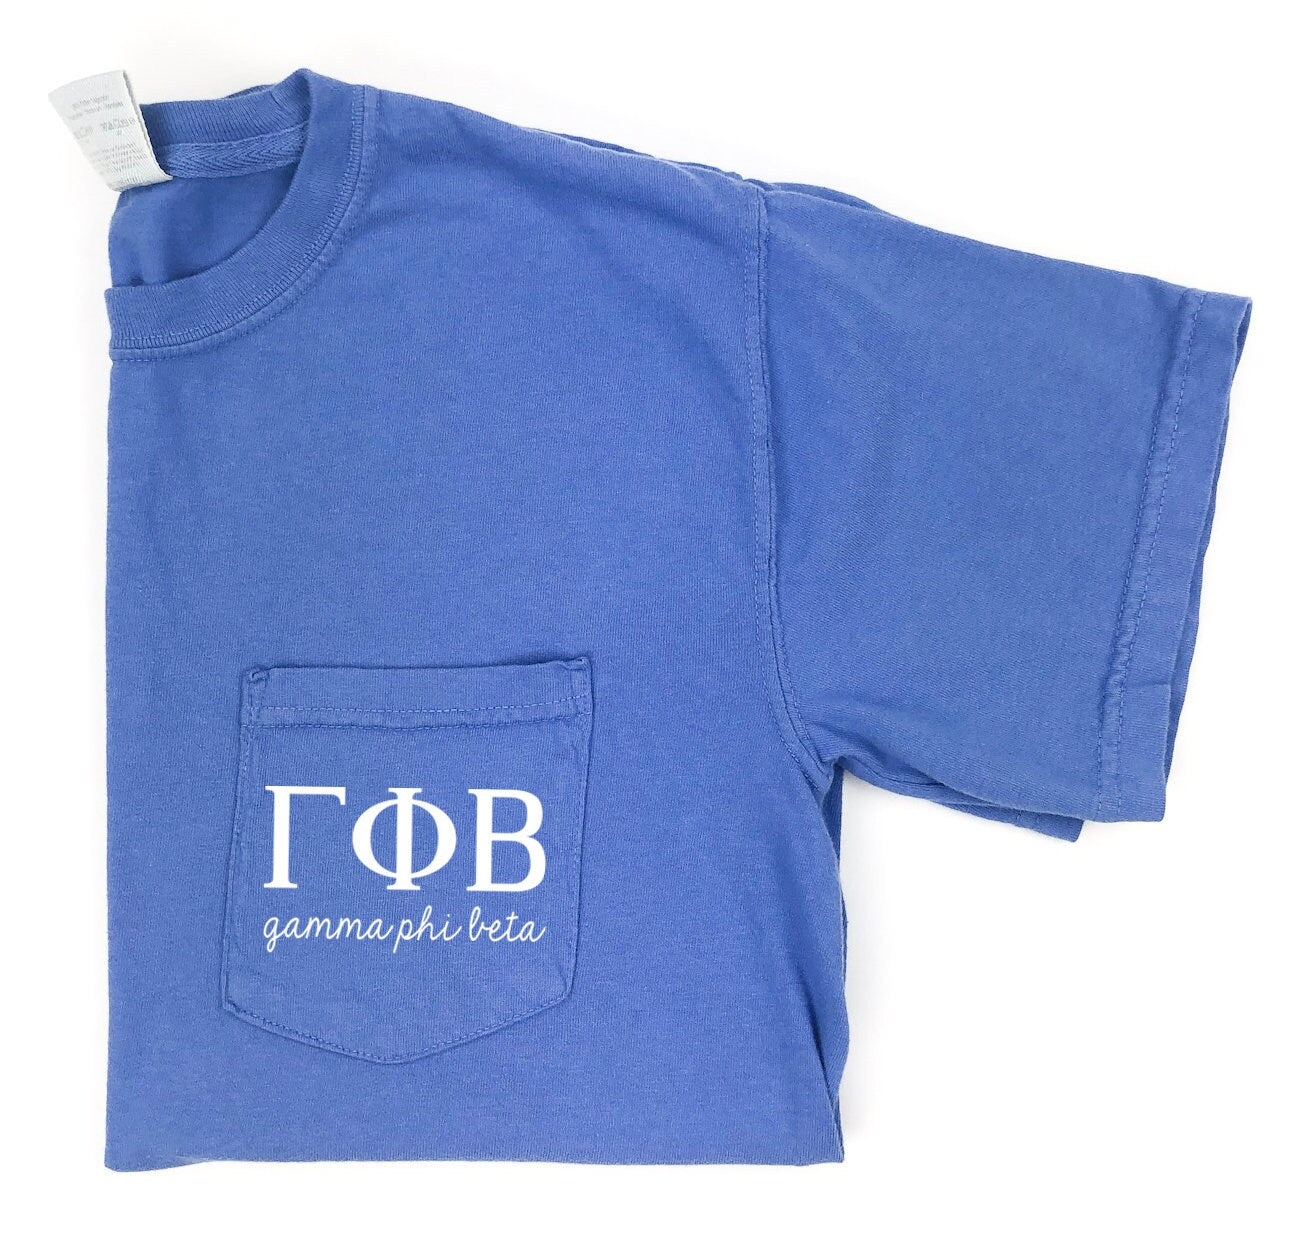 Gamma Phi Beta Script Letters T-Shirt - Mystic Blue - Go Greek Chic